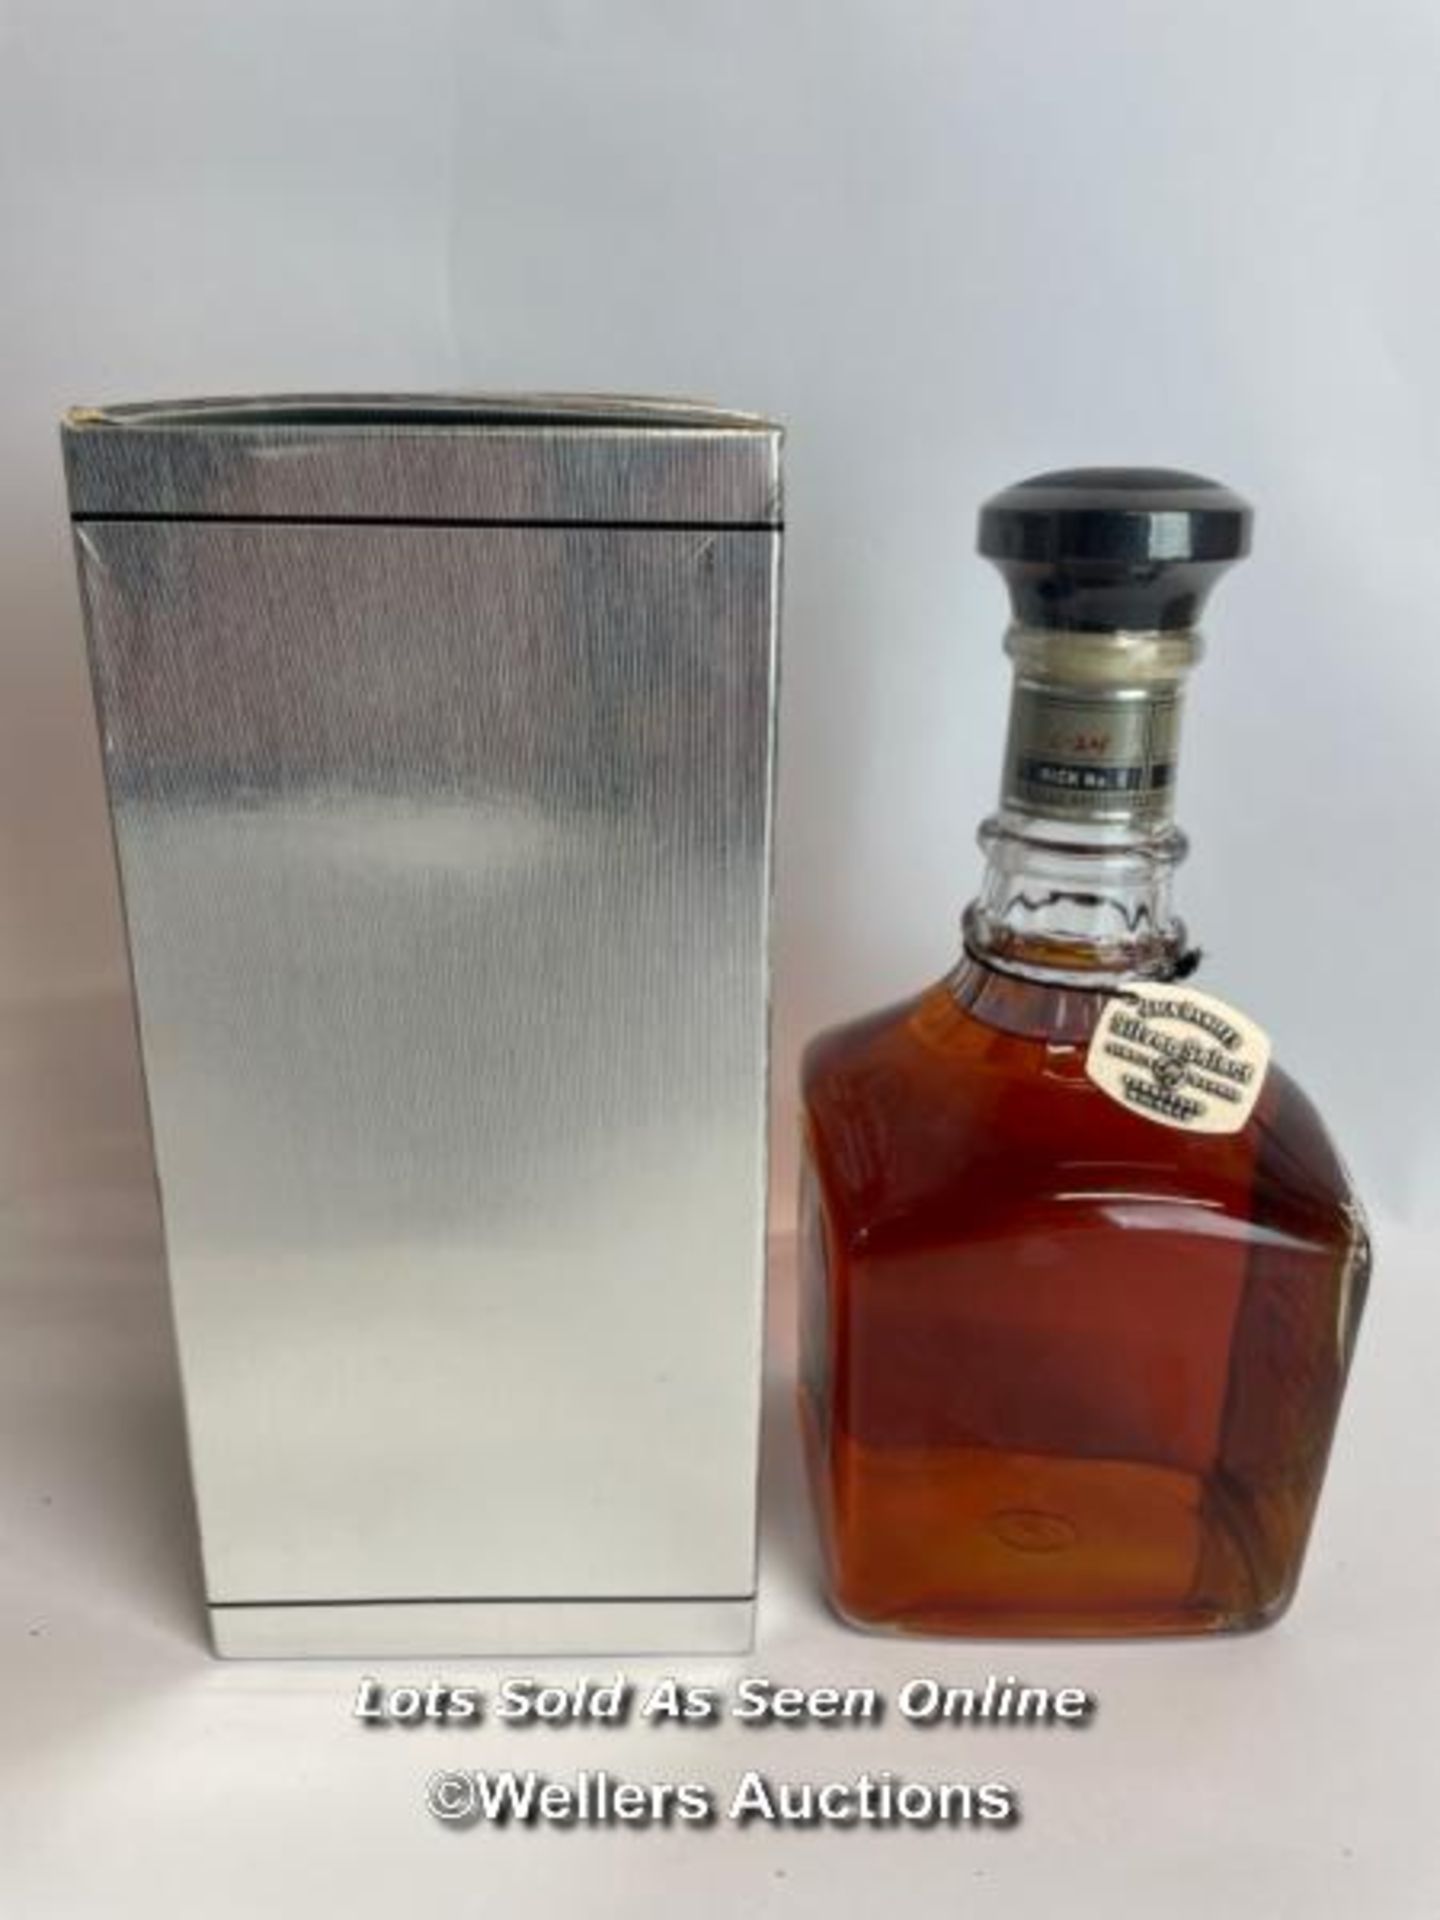 Jack Daniels Silver Select Single Barrel Tennessee Whiskey, Release date: 11-03-99, Barrek no: 9- - Image 4 of 8